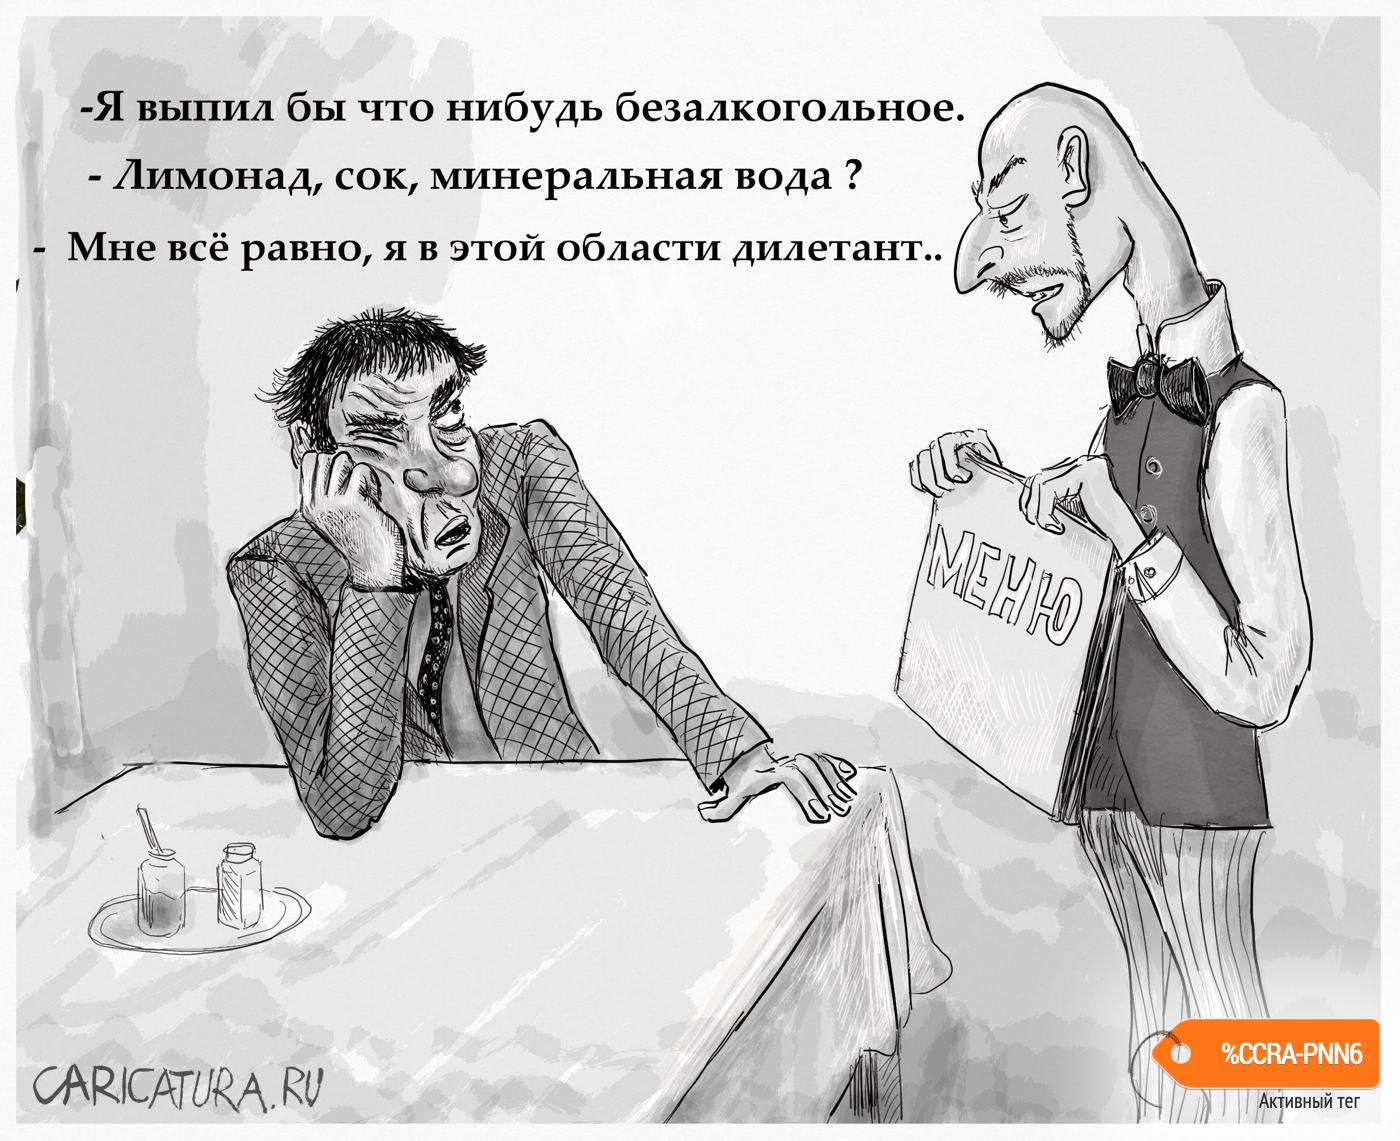 Карикатура "Дилетант", Владимир Силантьев